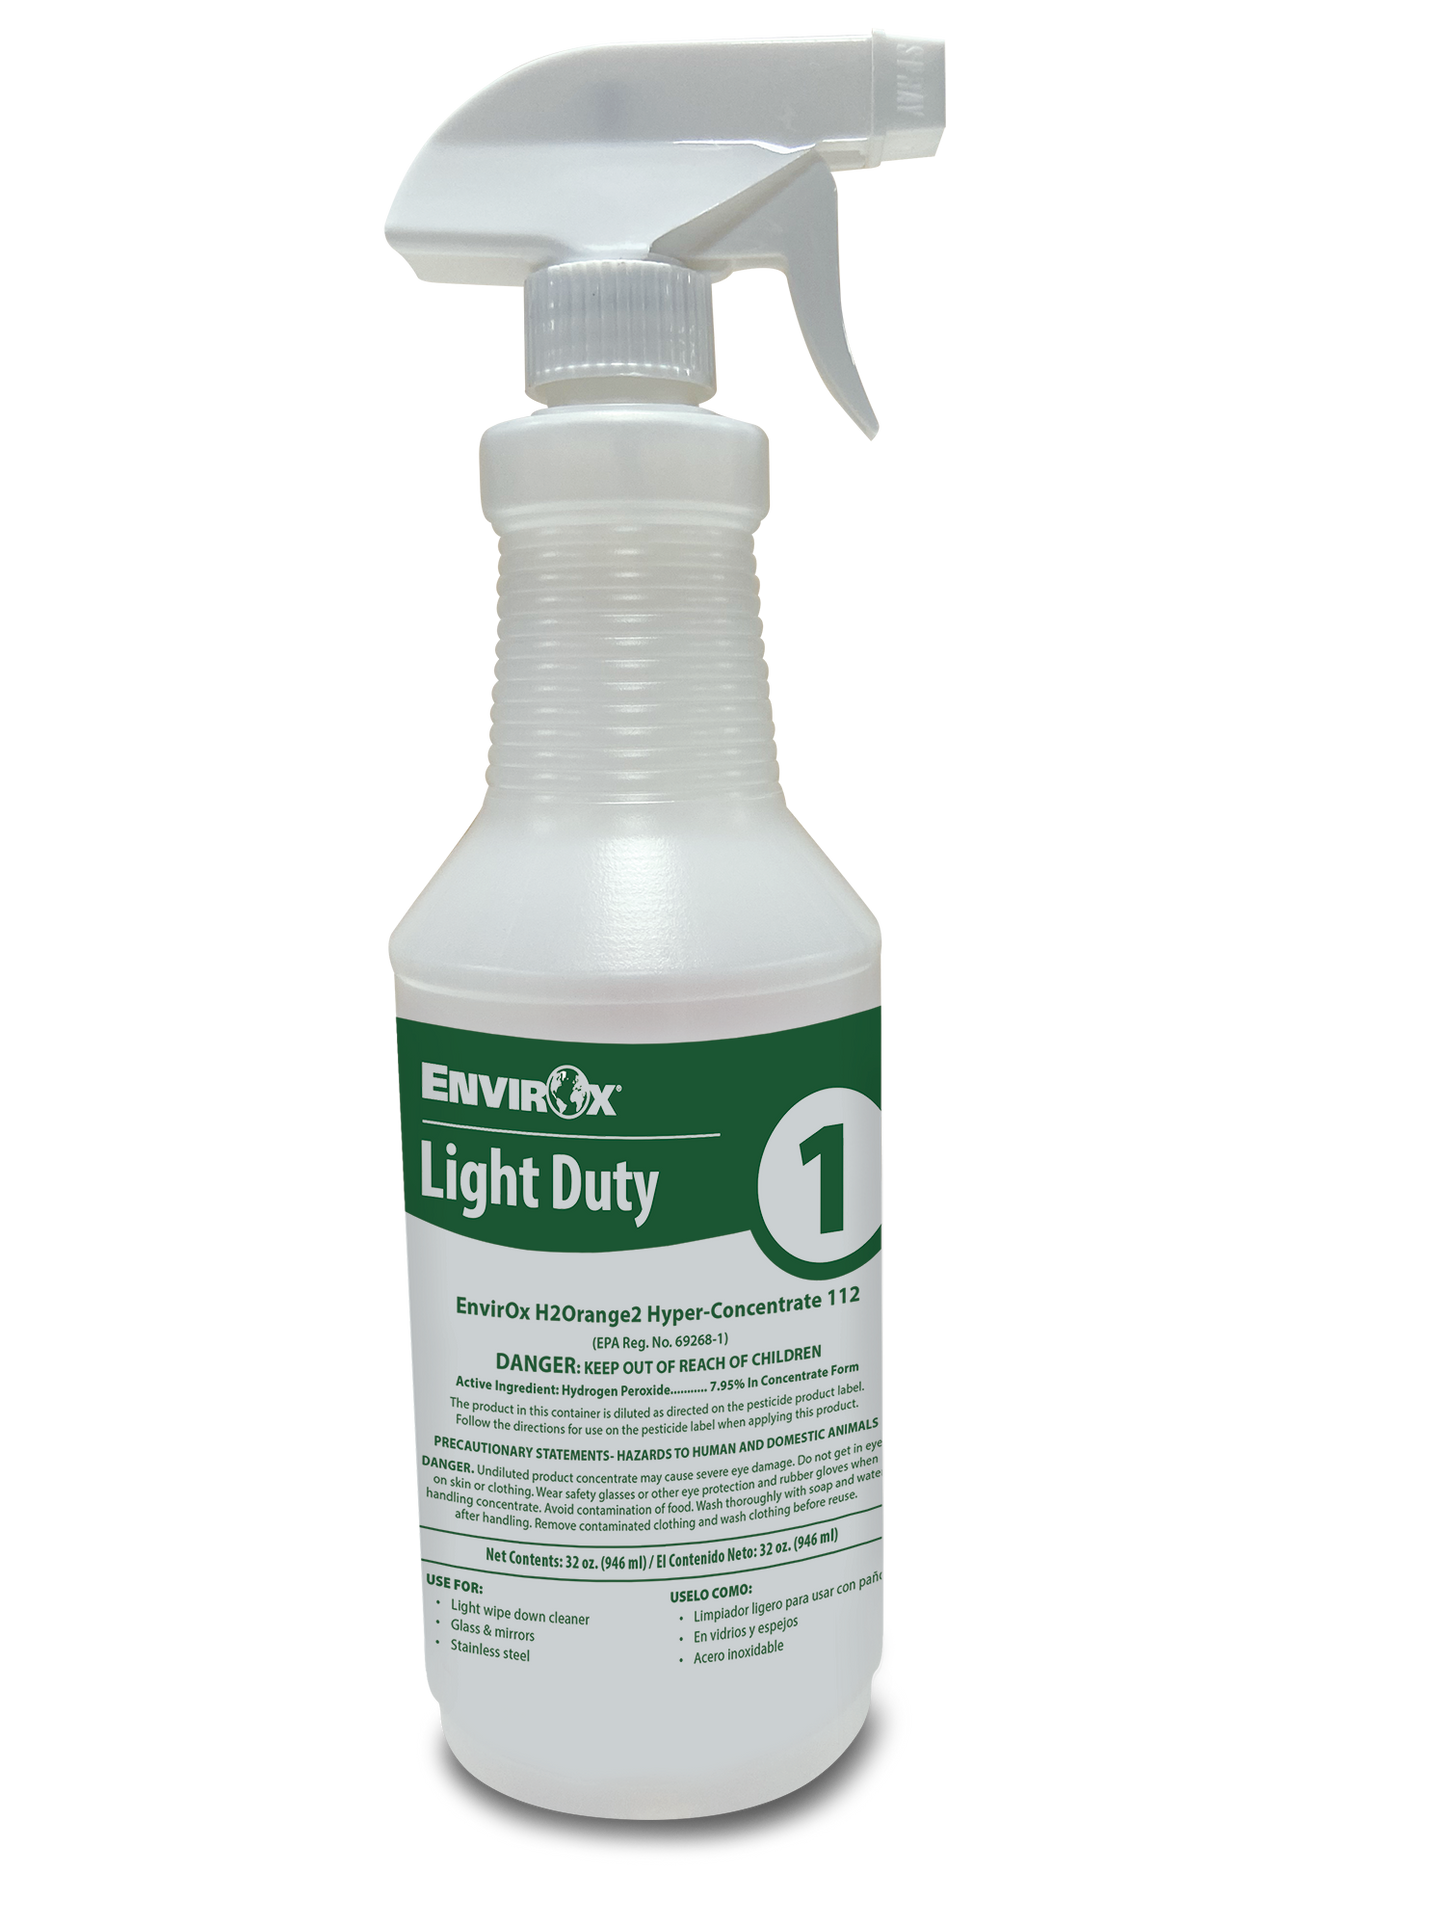 Absolute Bottle & Spray Head - Light Duty Green H2Orange2 Hyper-Concentrate 112 #1 Silk-Screened